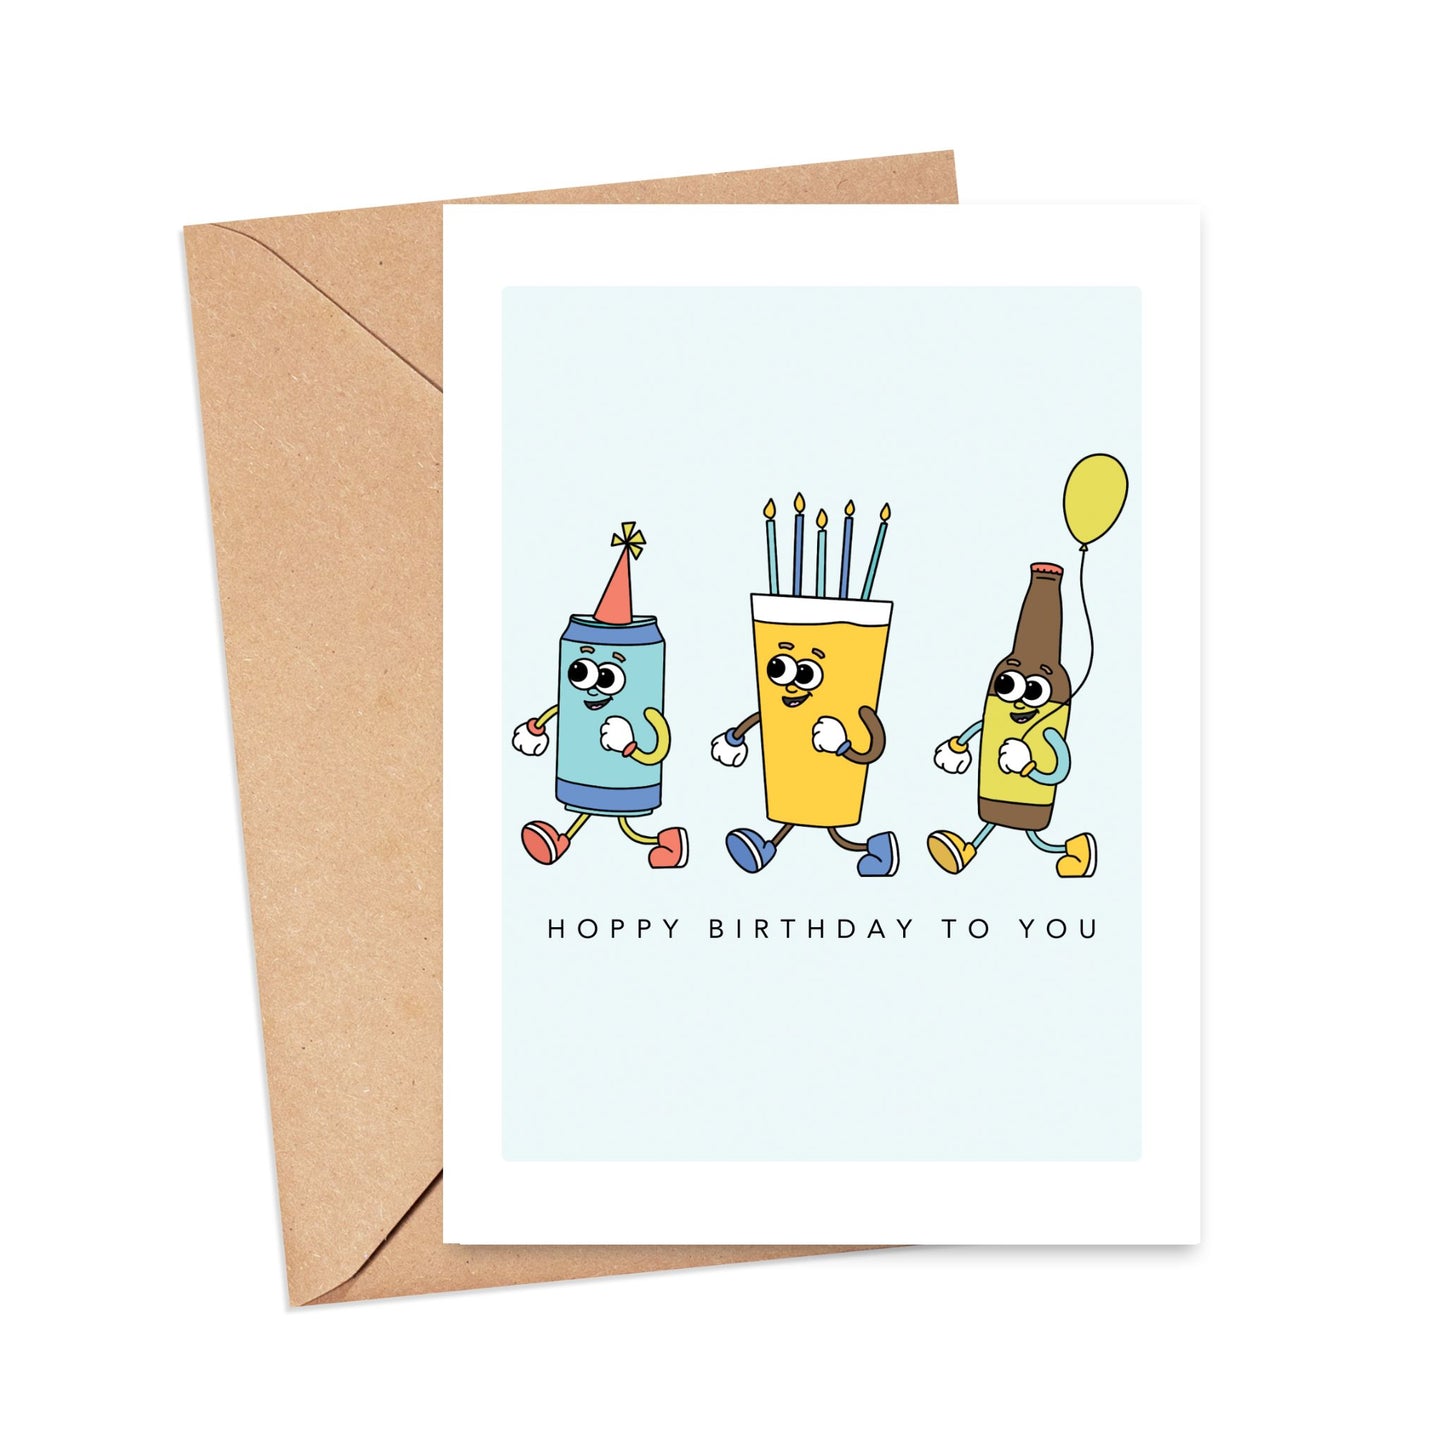 Hoppy Birthday to You Card Simply Happy Cards